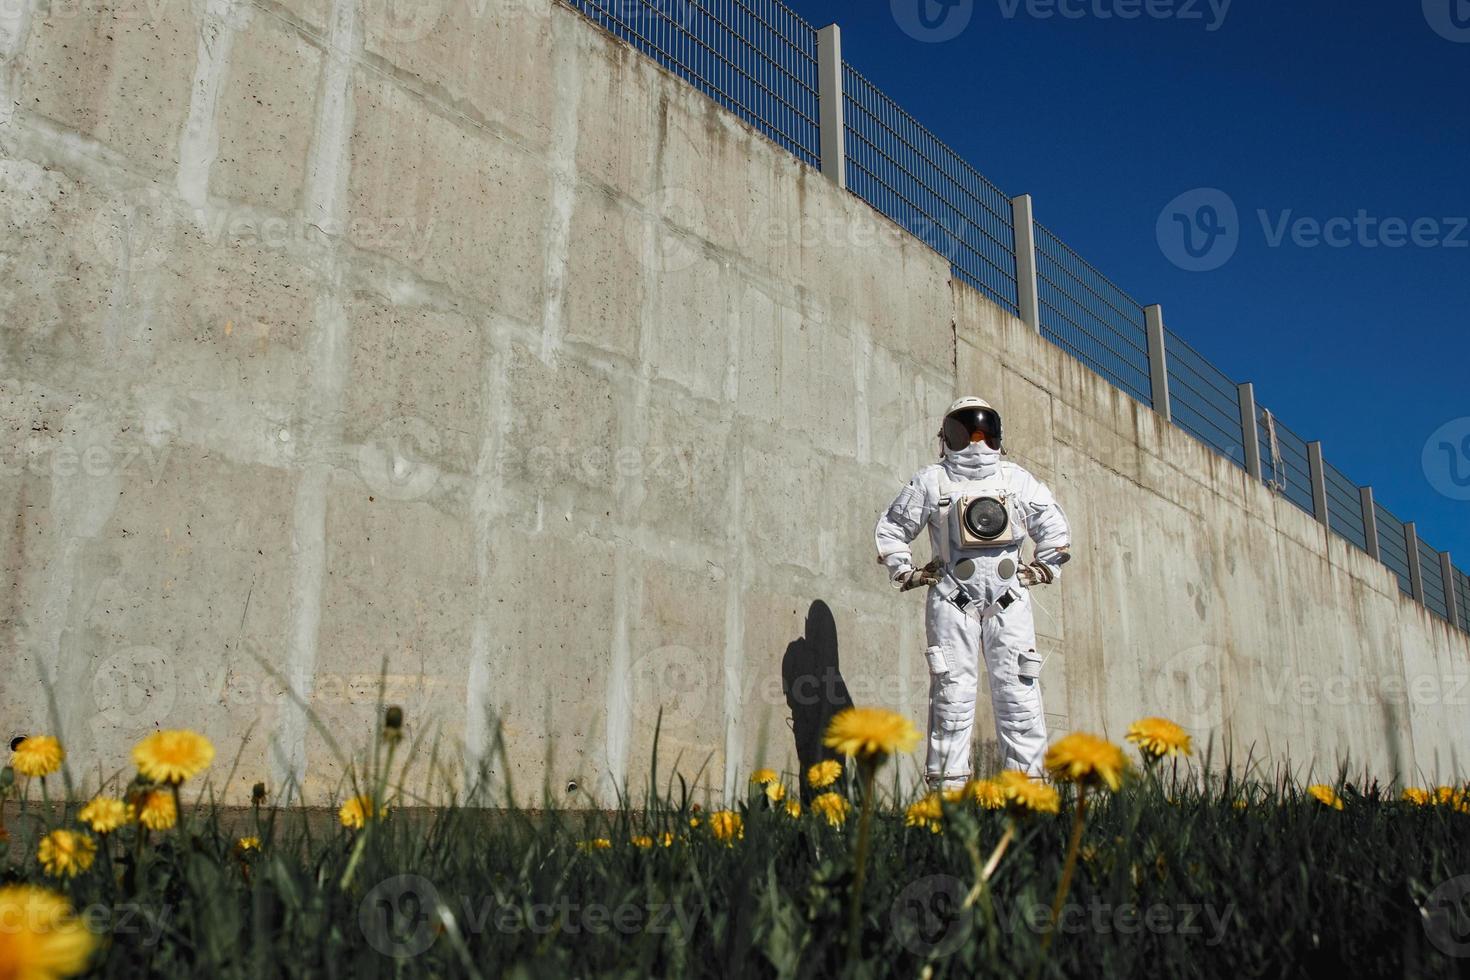 Astronauta futurista en un casco contra paredes grises foto